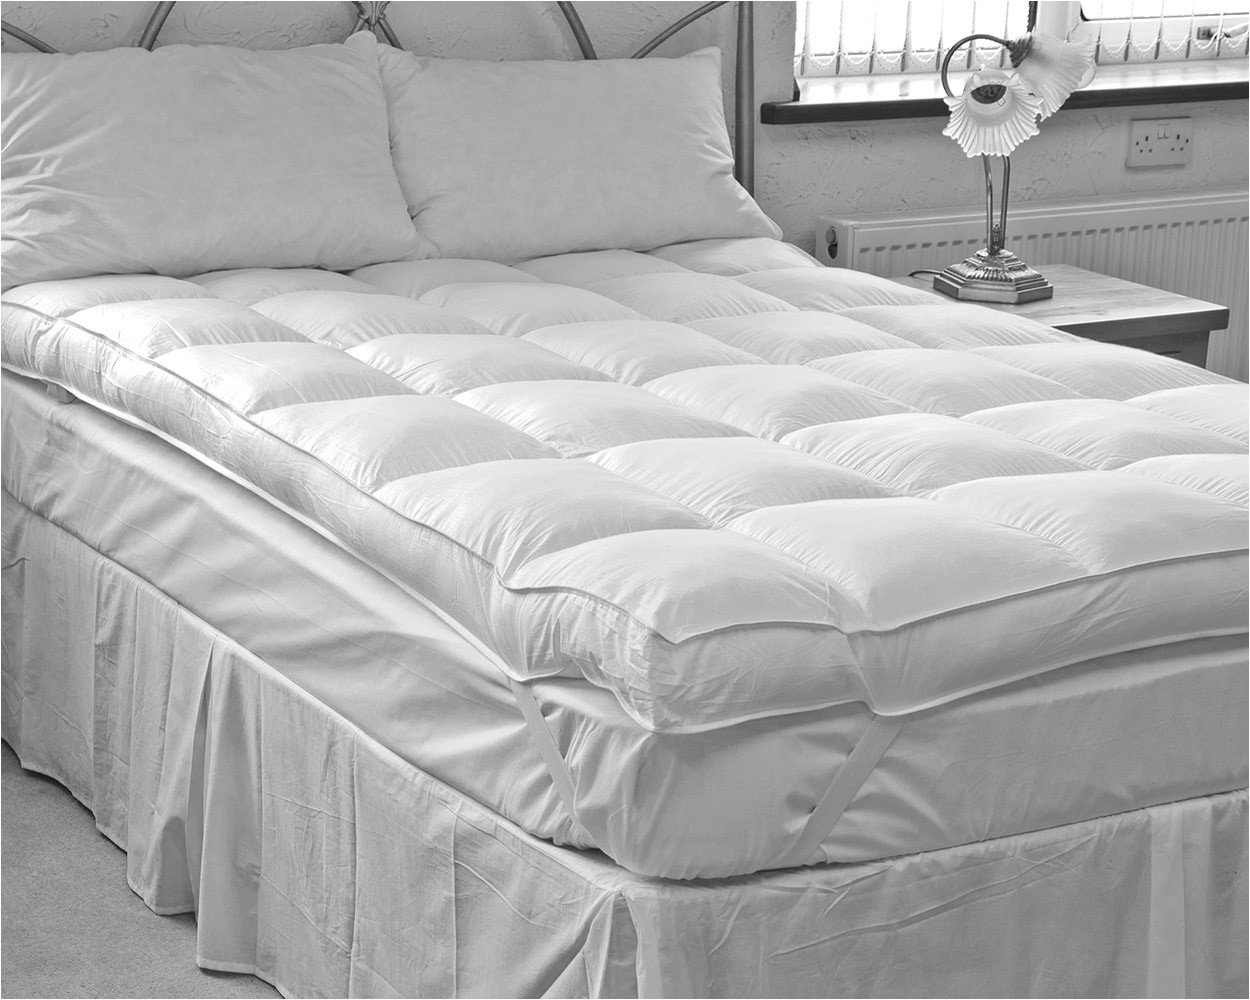 4 inch thick mattress foam topper amazon